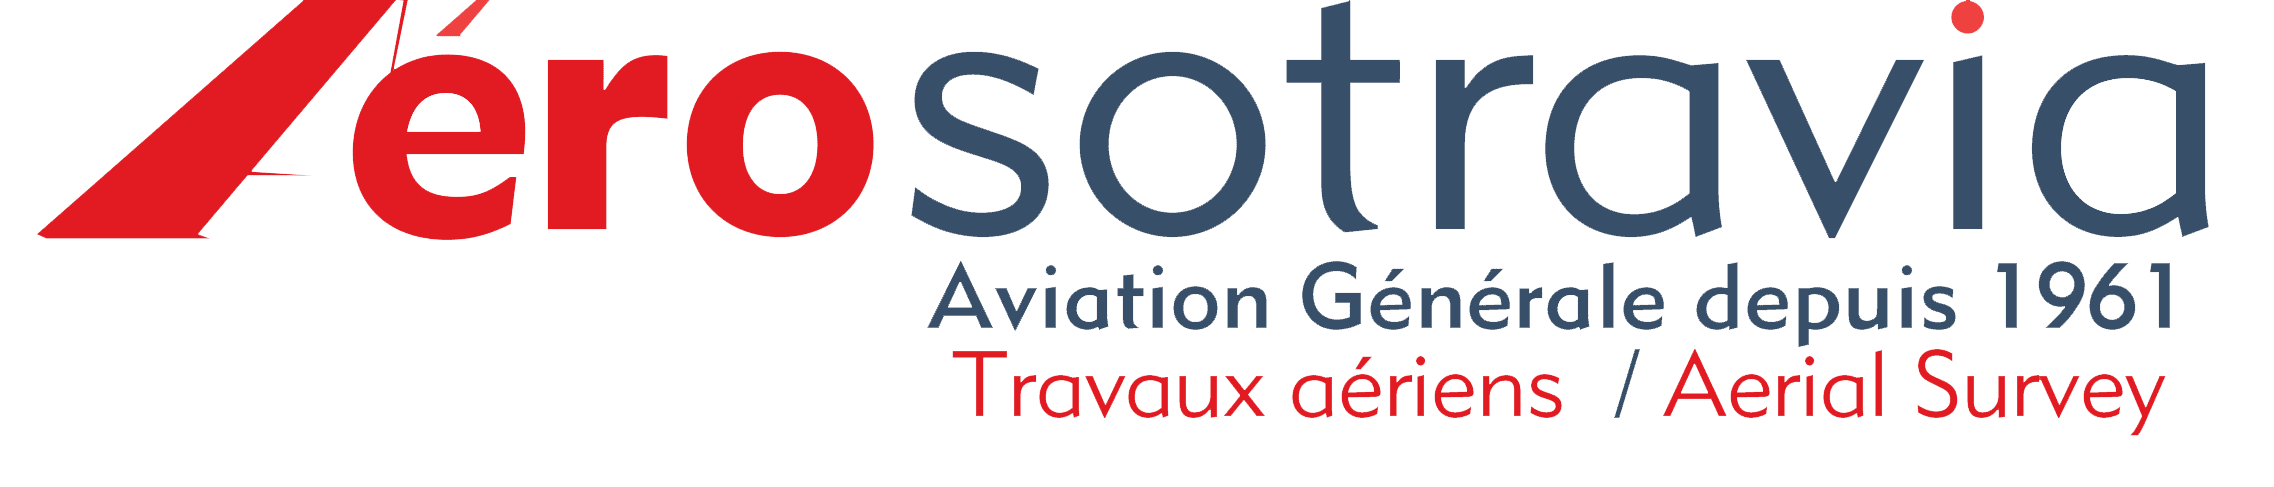 ASI-Group Aerosotravia